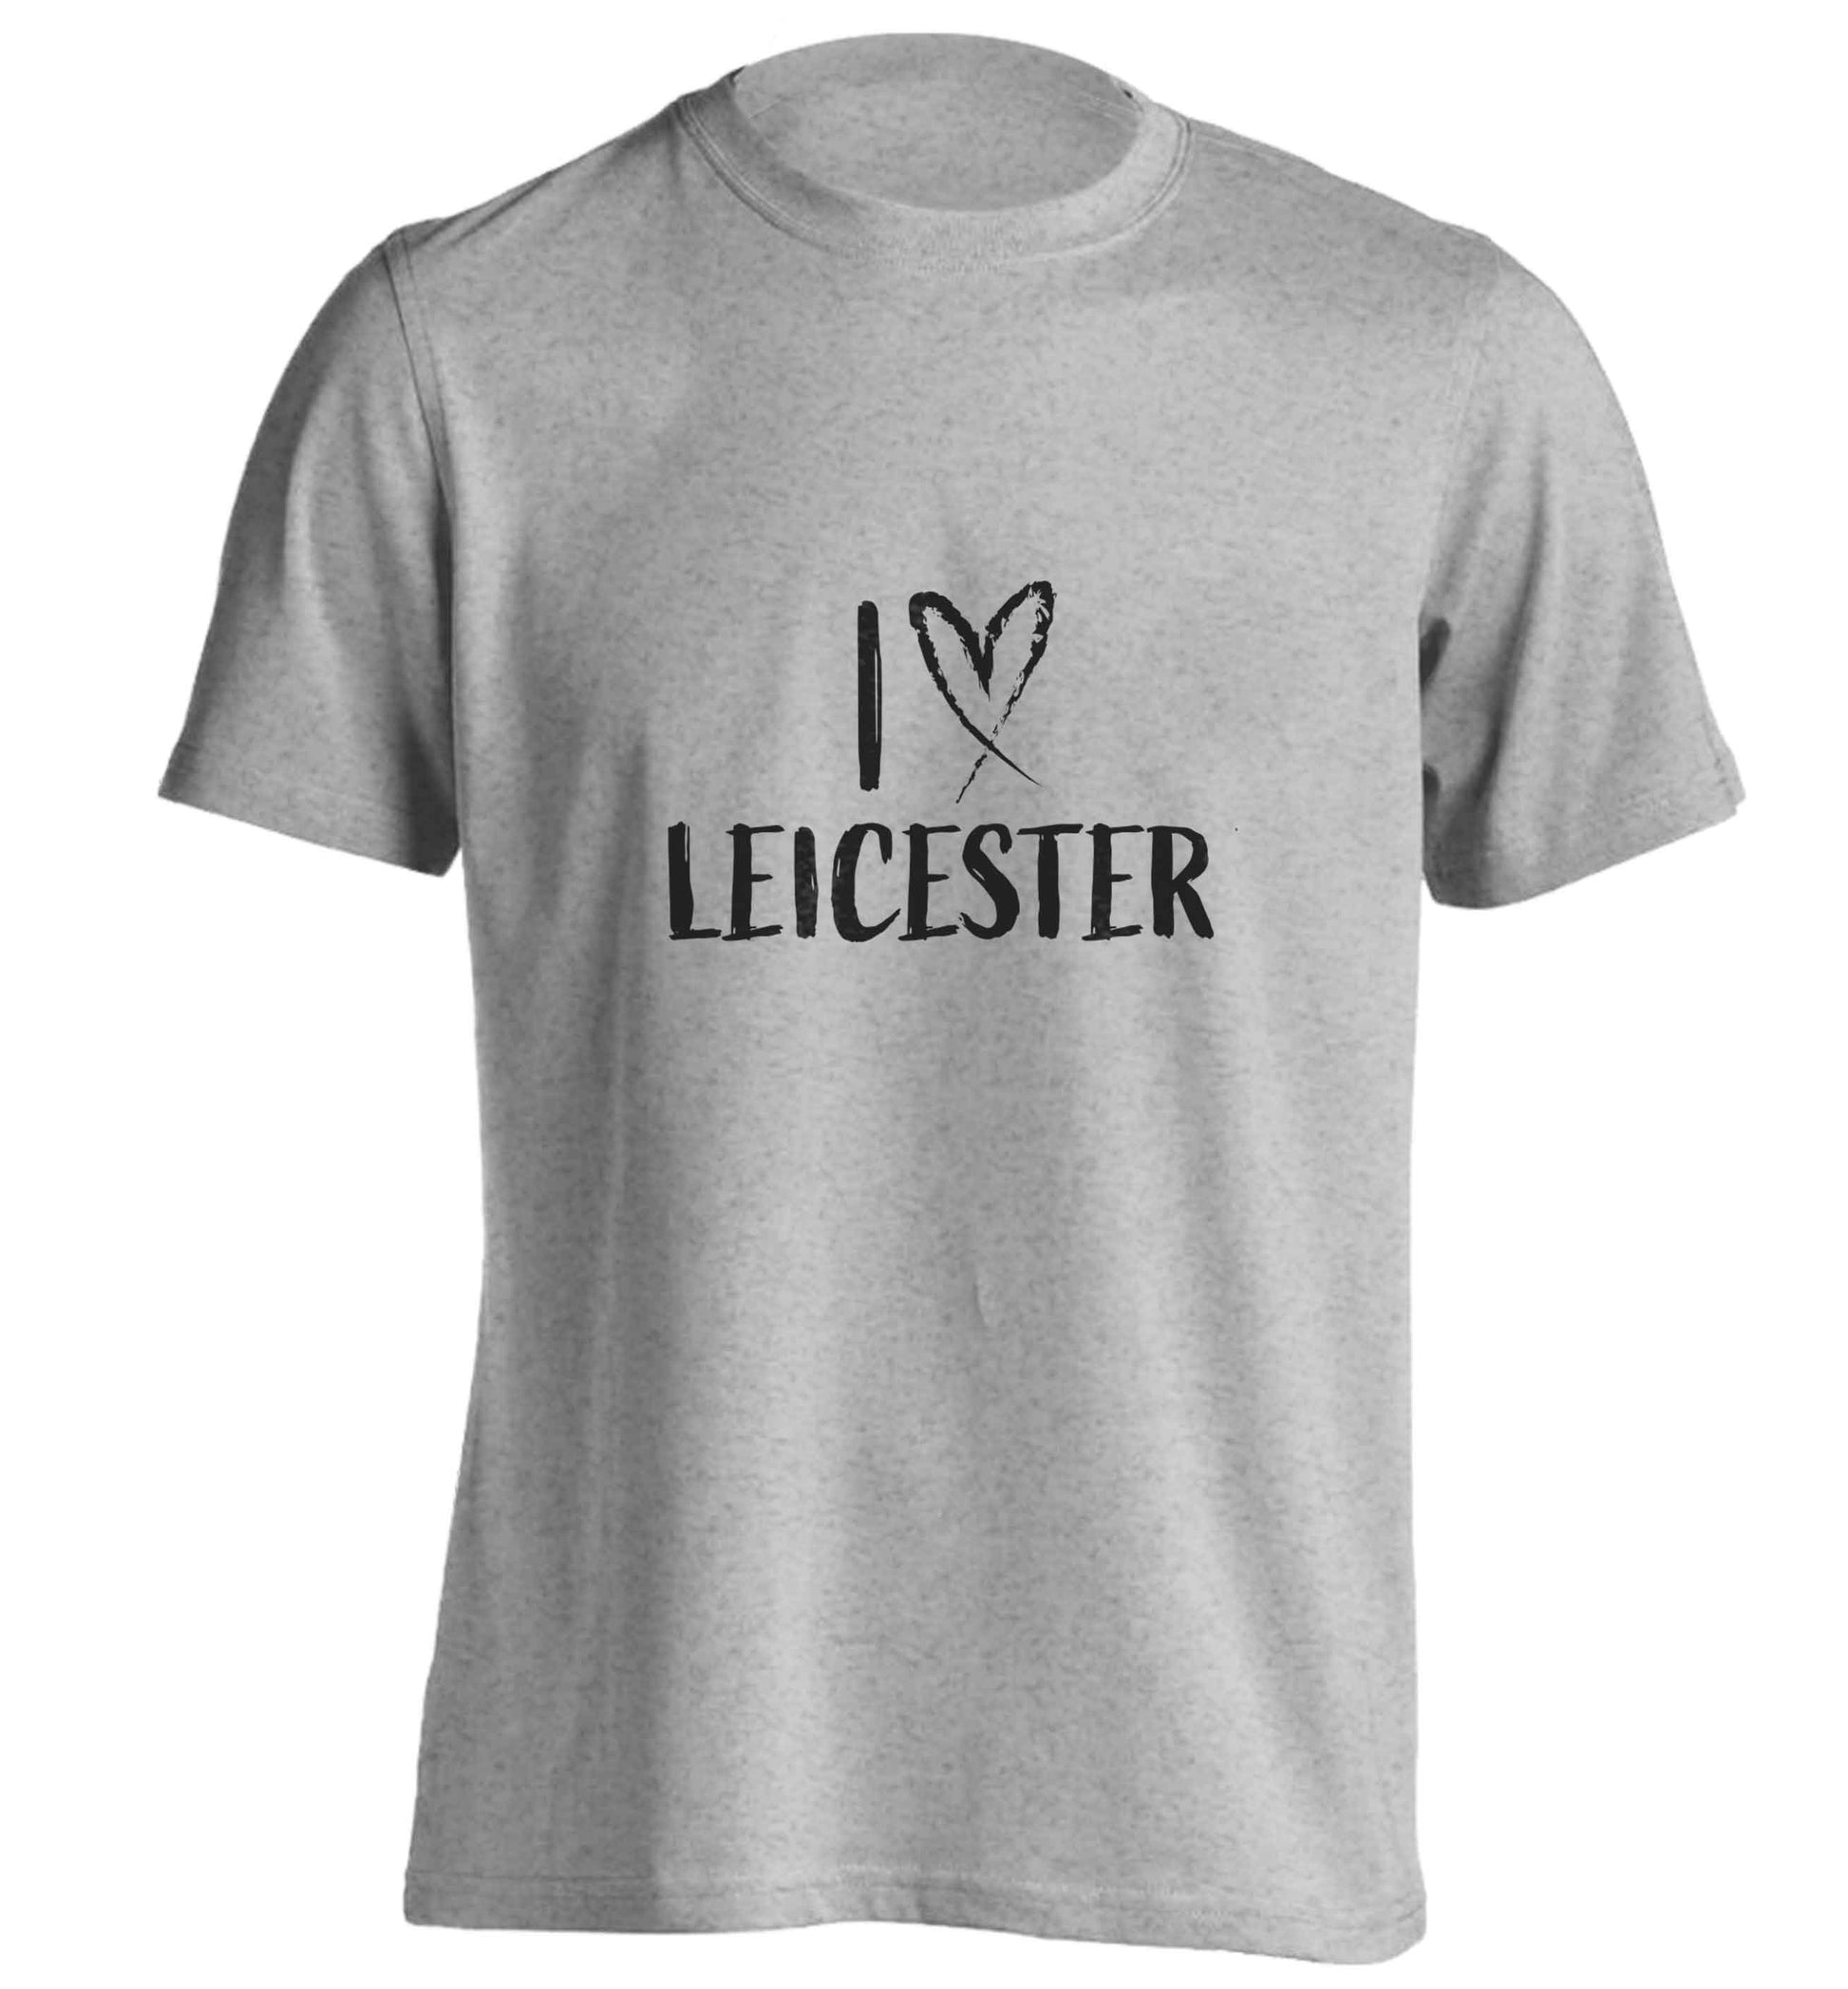 I love Leicester adults unisex grey Tshirt 2XL